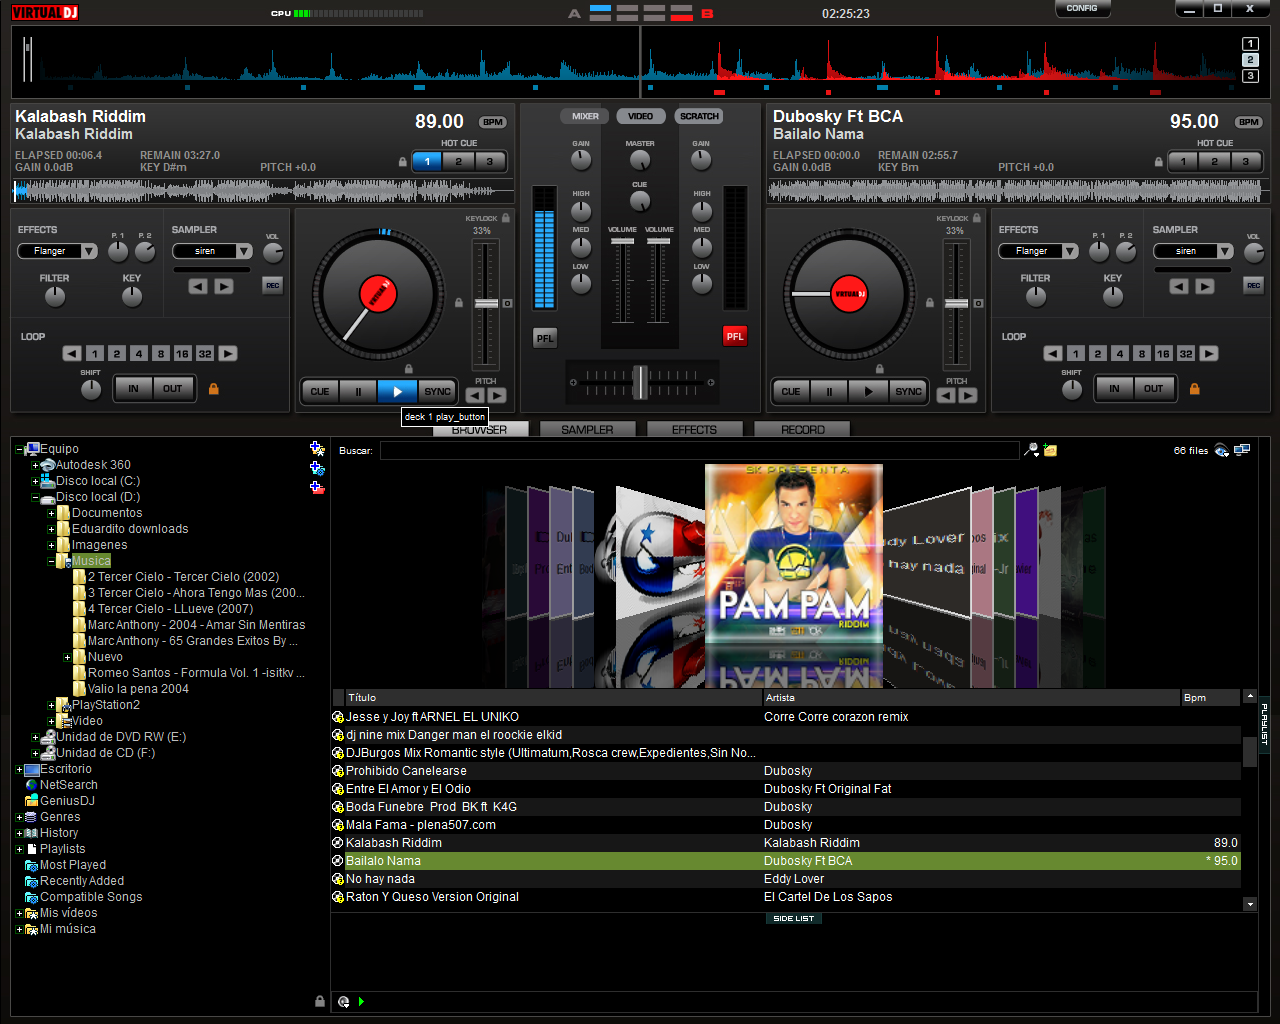 Virtual dj 8 pro setup with crack download pc